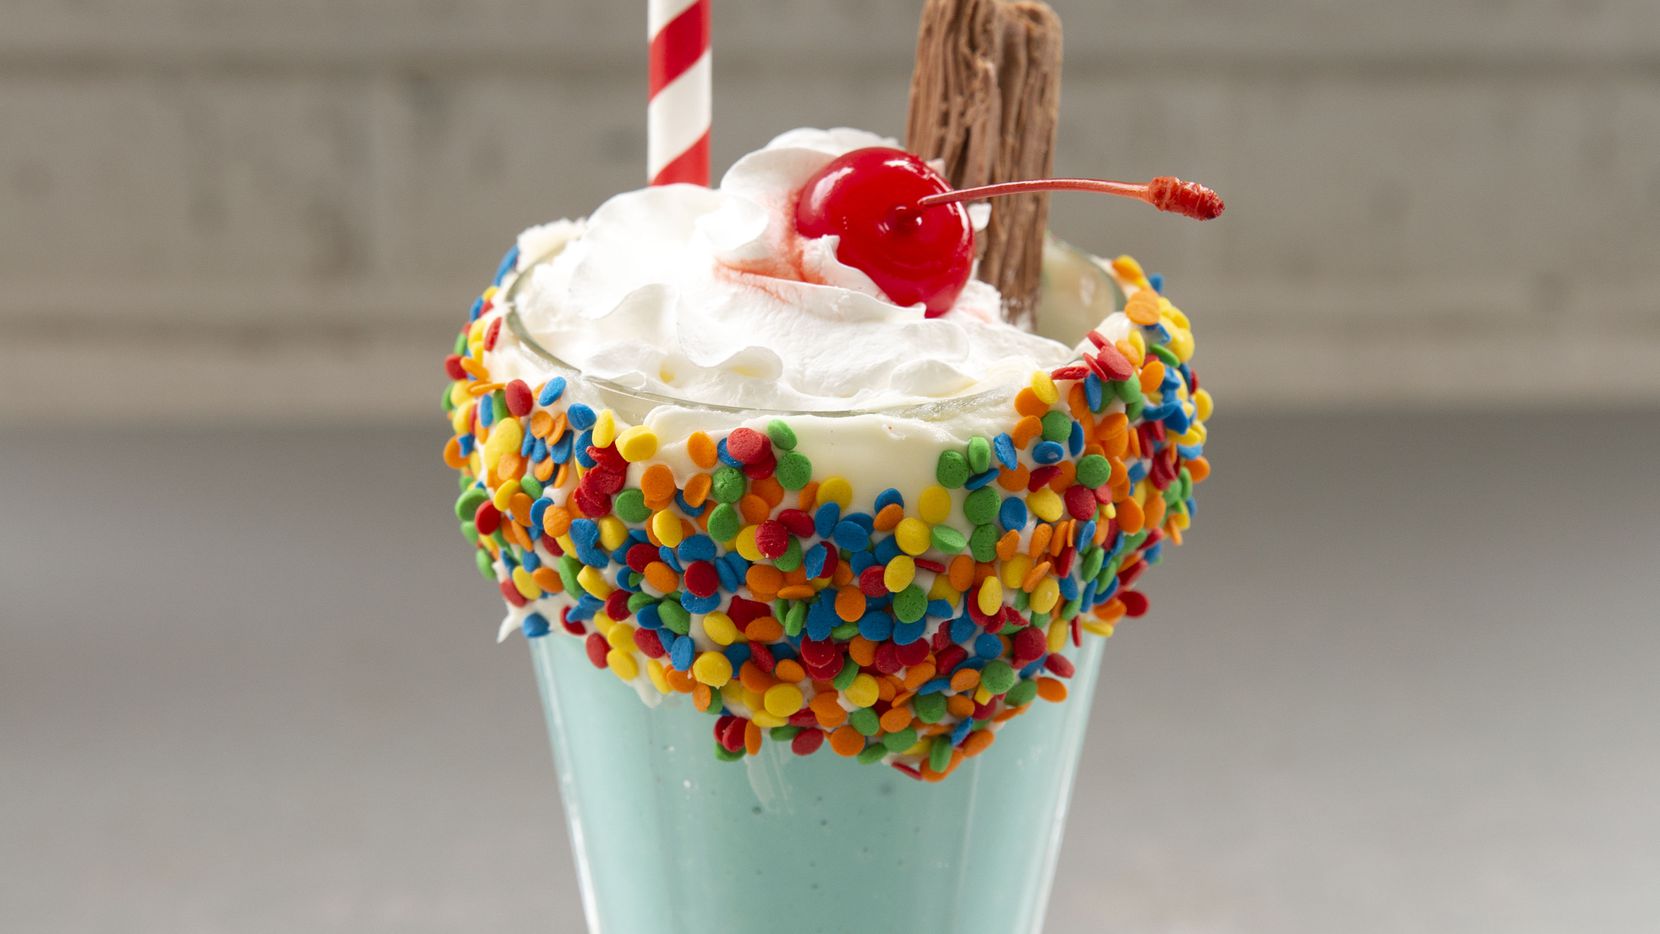 The Flake shake is a vanilla-based shake with a Cadbury Flake Chocolate Bar and sprinkles....